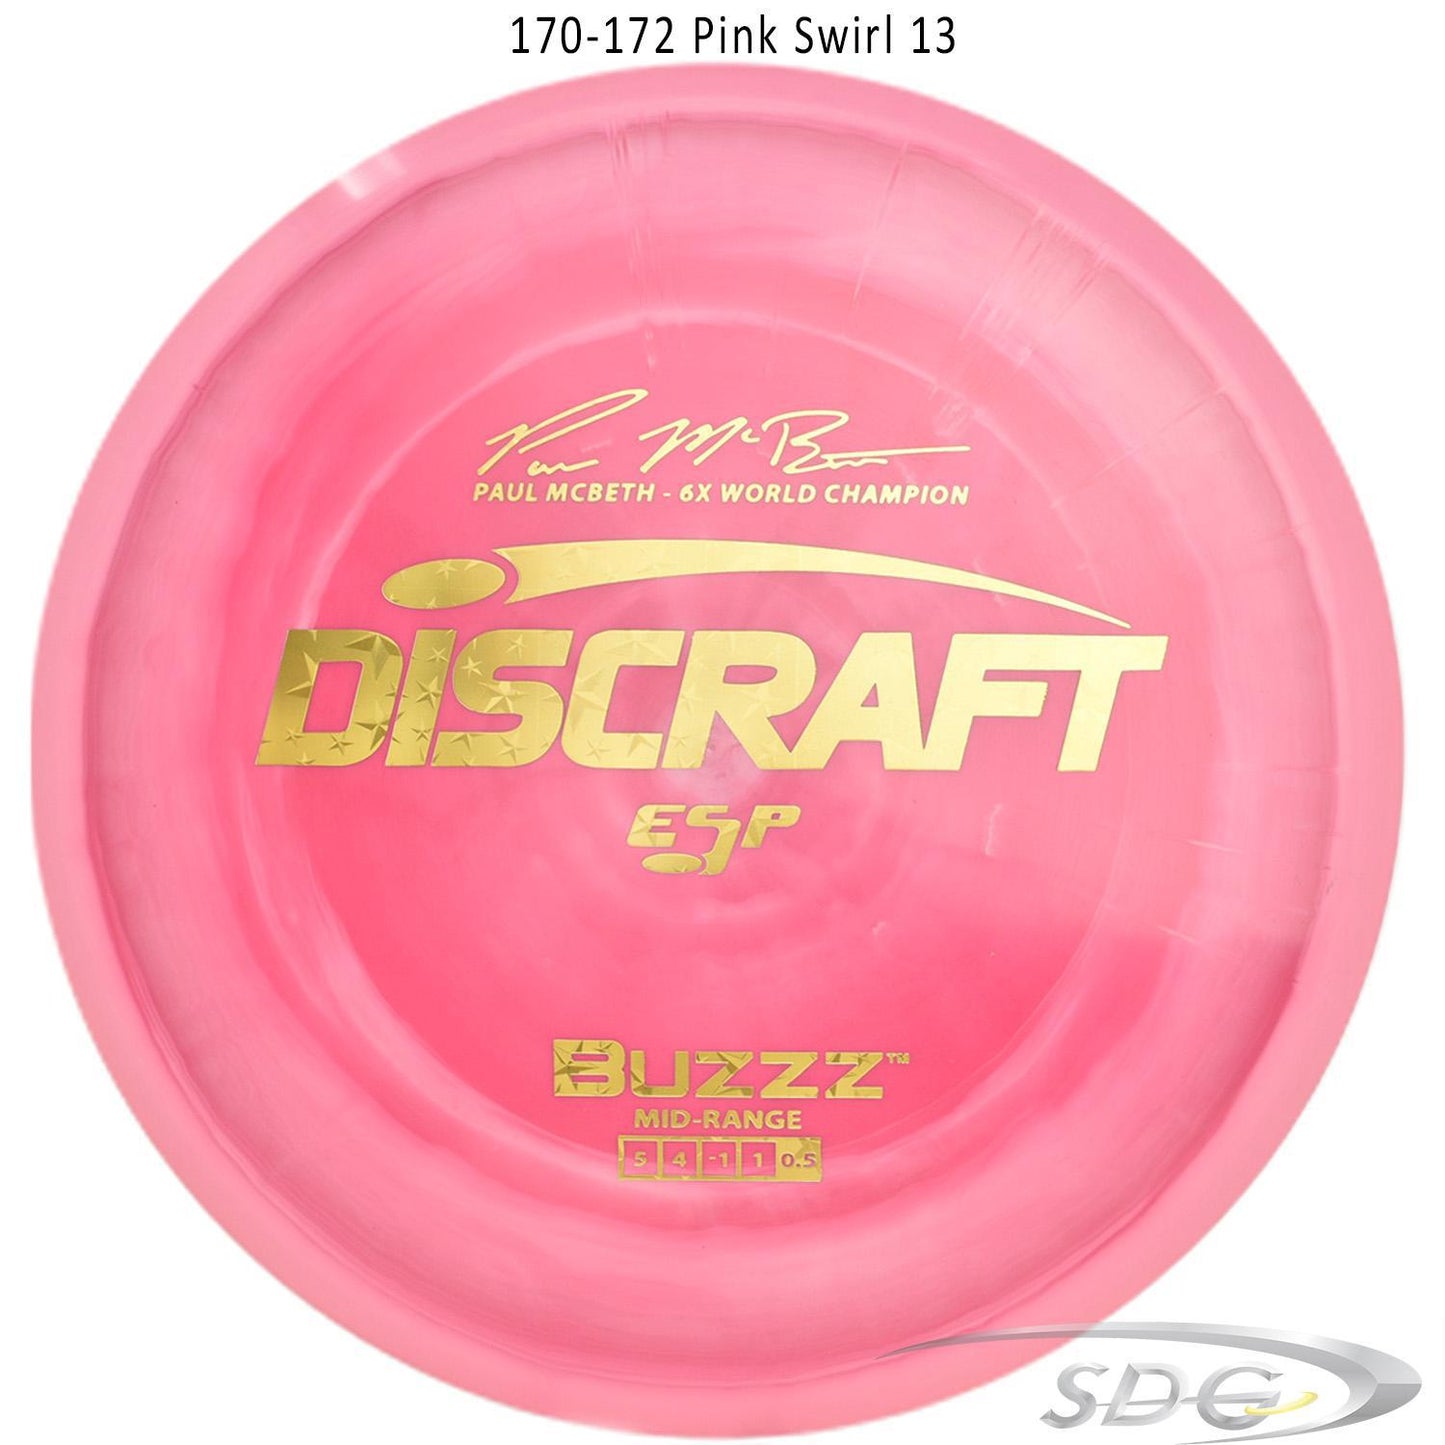 discraft-esp-buzzz-6x-paul-mcbeth-signature-series-disc-golf-mid-range-172-170-weights 170-172 Pink Swirl 13 